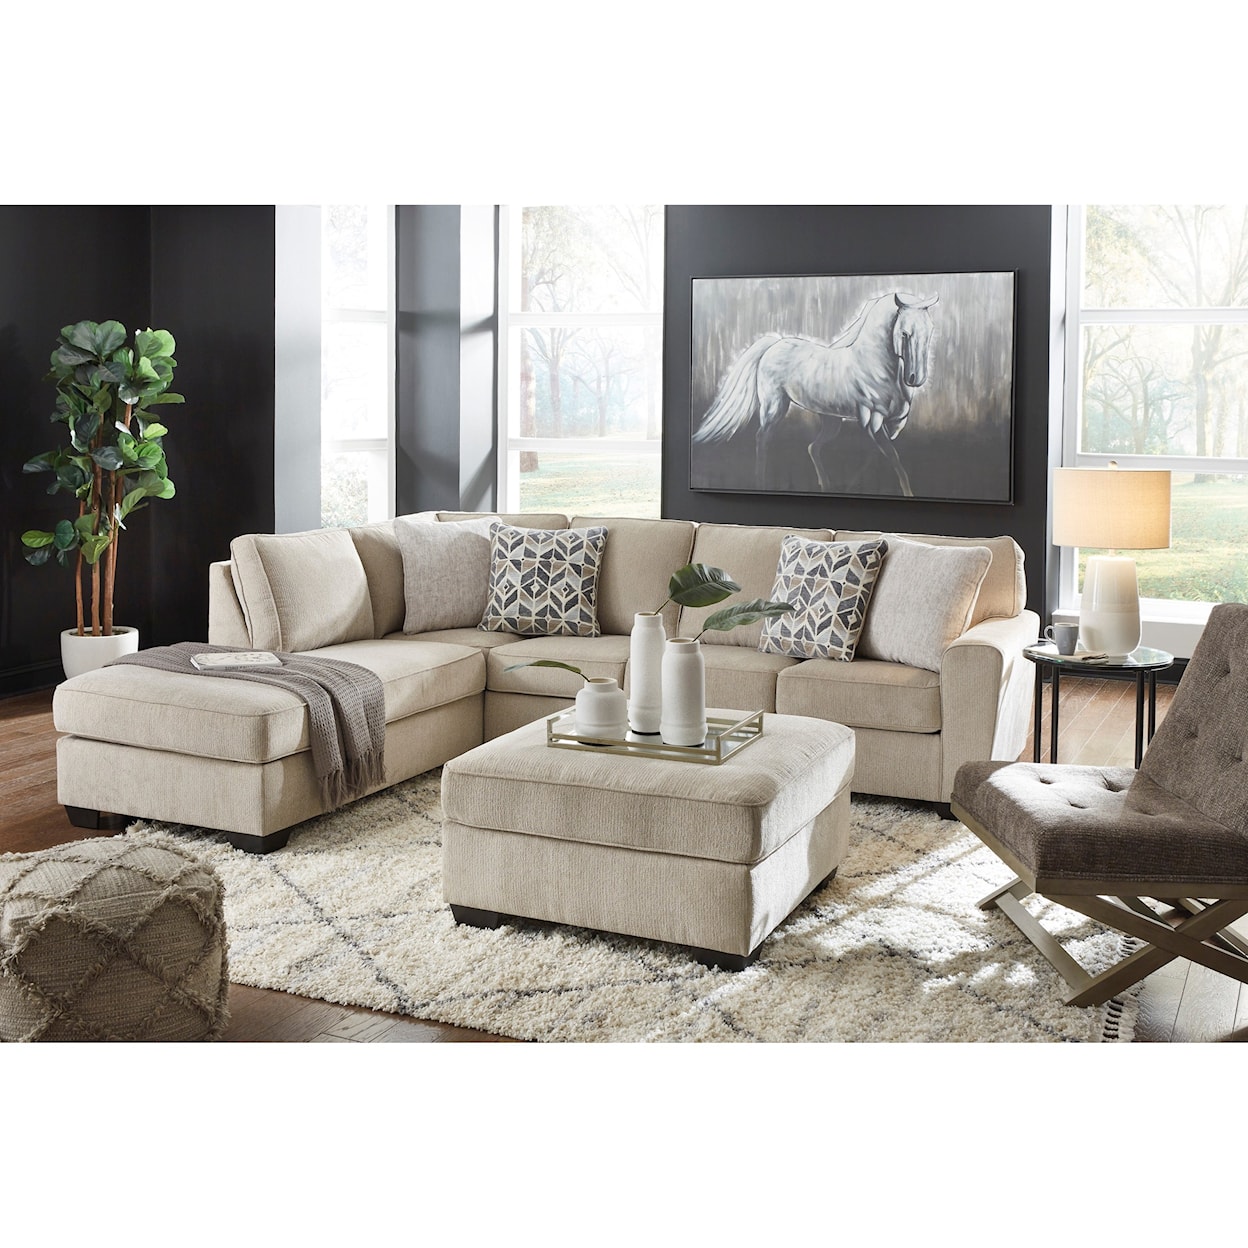 StyleLine Decelle Living Room Group